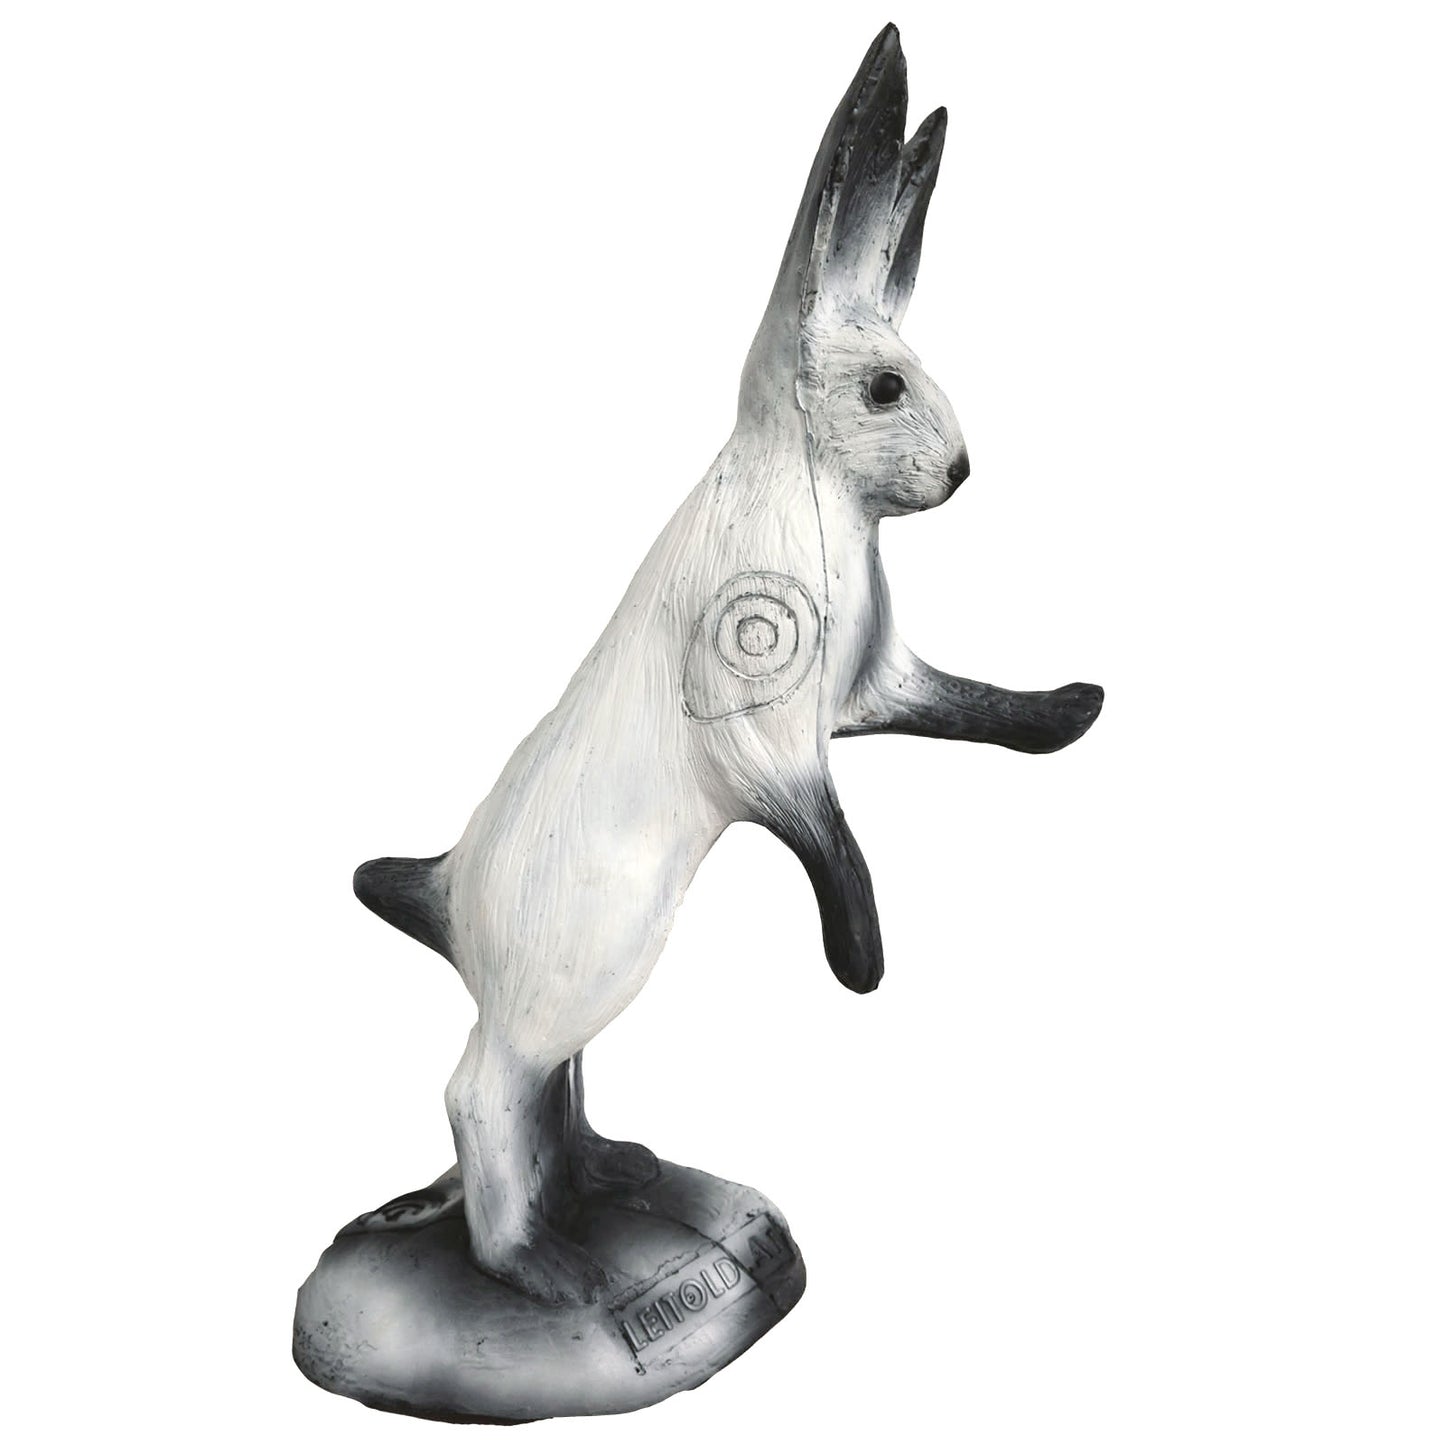 100308 Leitold Alpine hare on hind legs